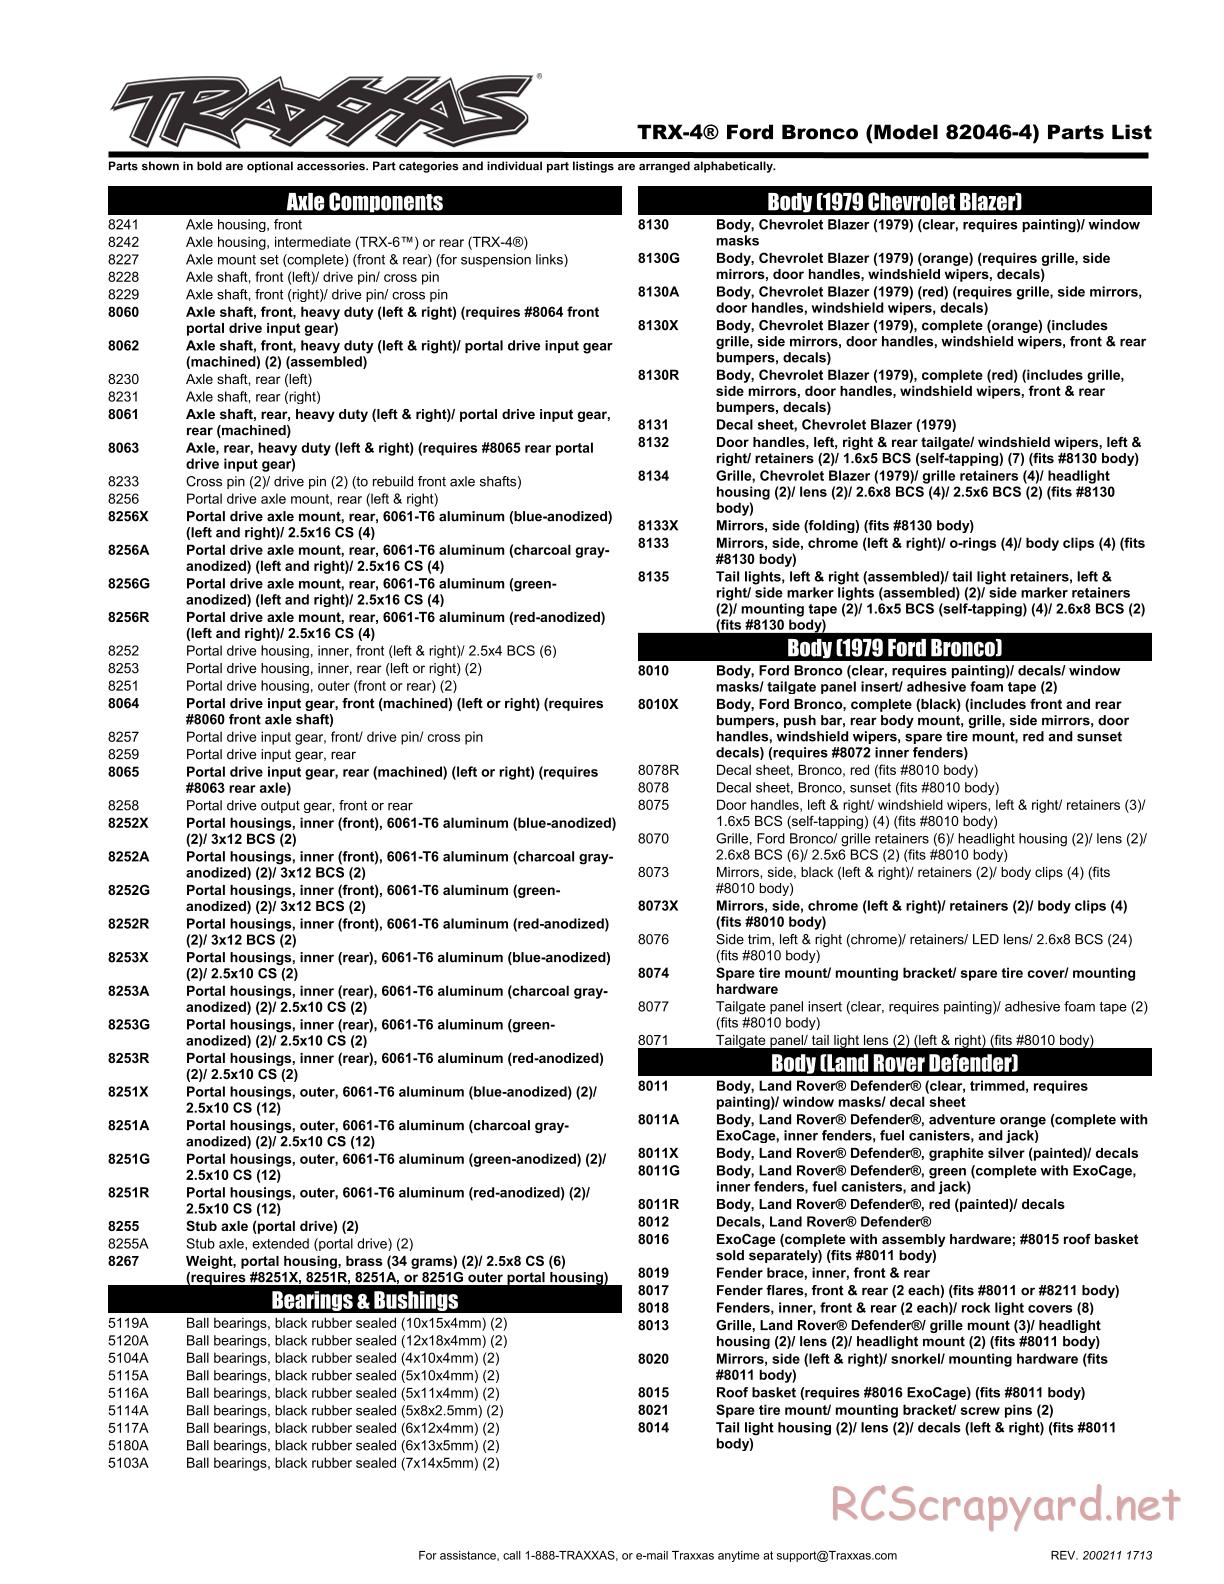 Traxxas - TRX-4 Ford Bronco - Parts List - Page 1